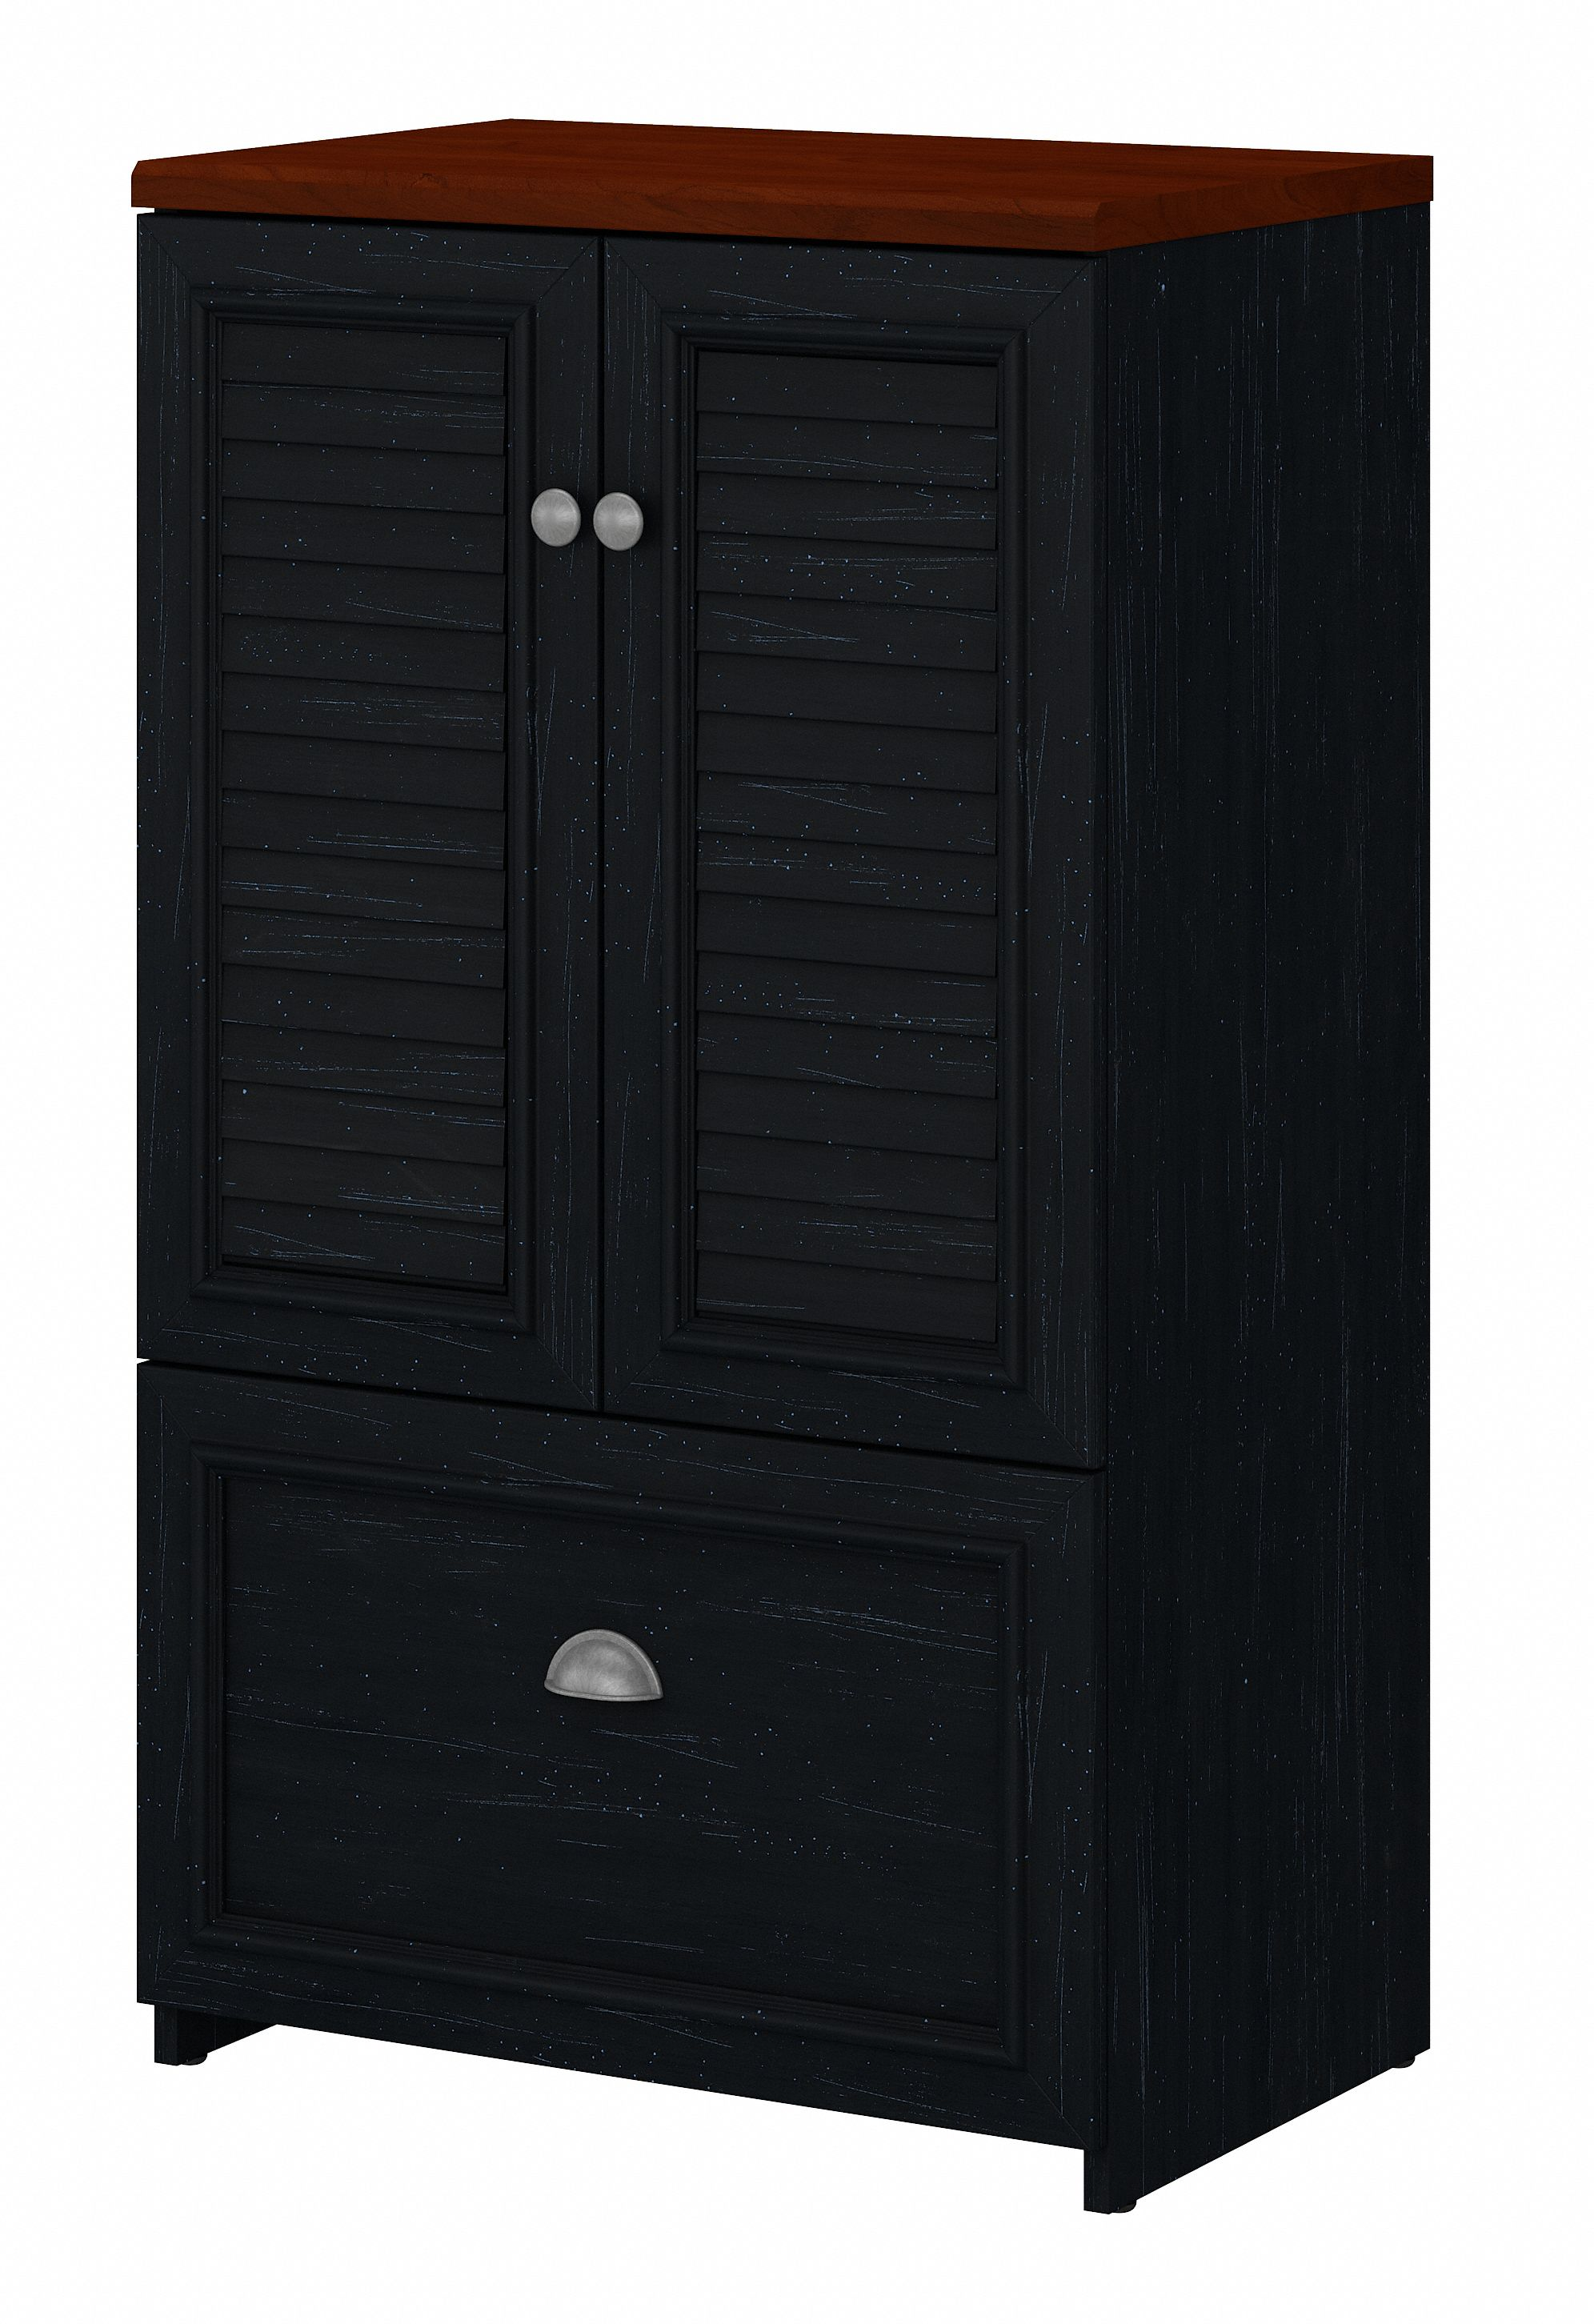 Shop Bush Furniture Fairview 2 Door Storage Cabinet with File Drawer 02 WC53980-03 #color_antique black/hansen cherry